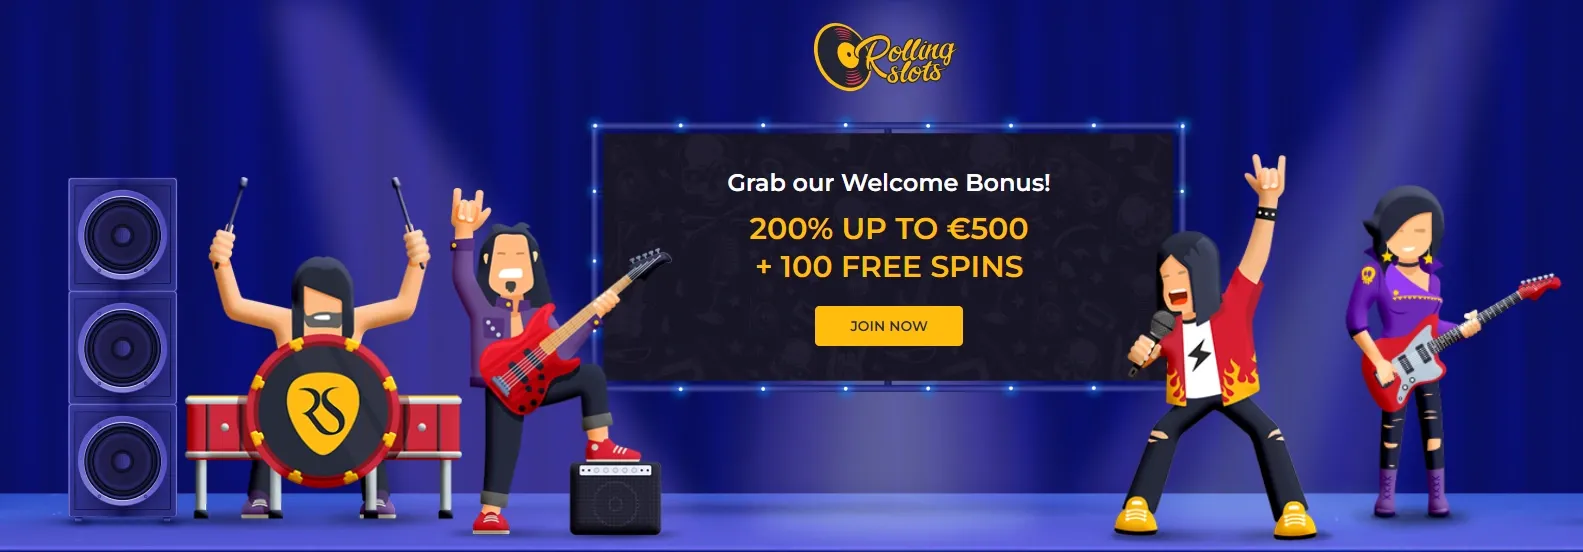 Rolling slots casino welcome bonus